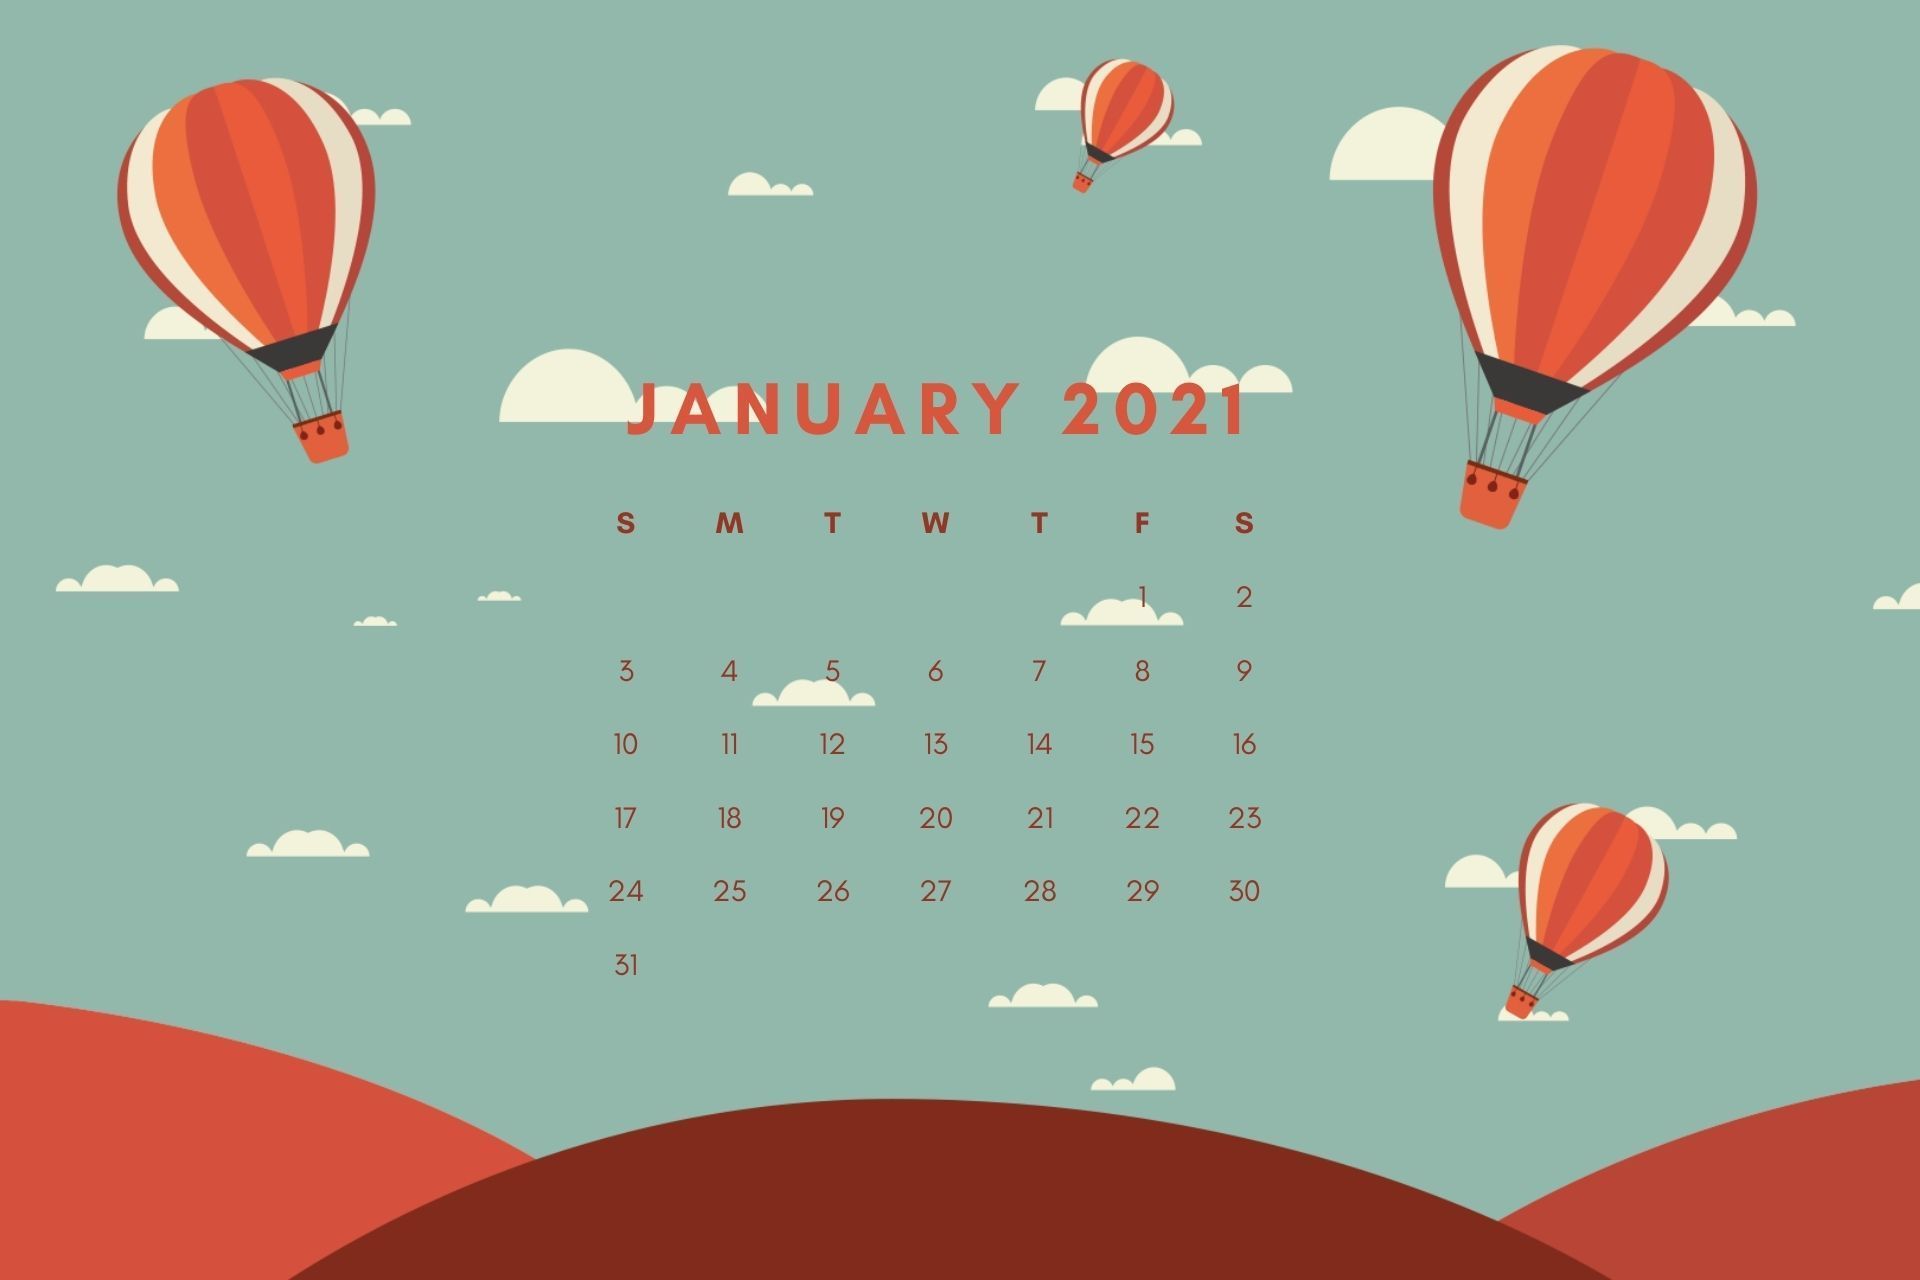 January 2021 Calendar HD Wallpaper Download. Calendar wallpaper, Desktop wallpaper calendar, 2021 calendar